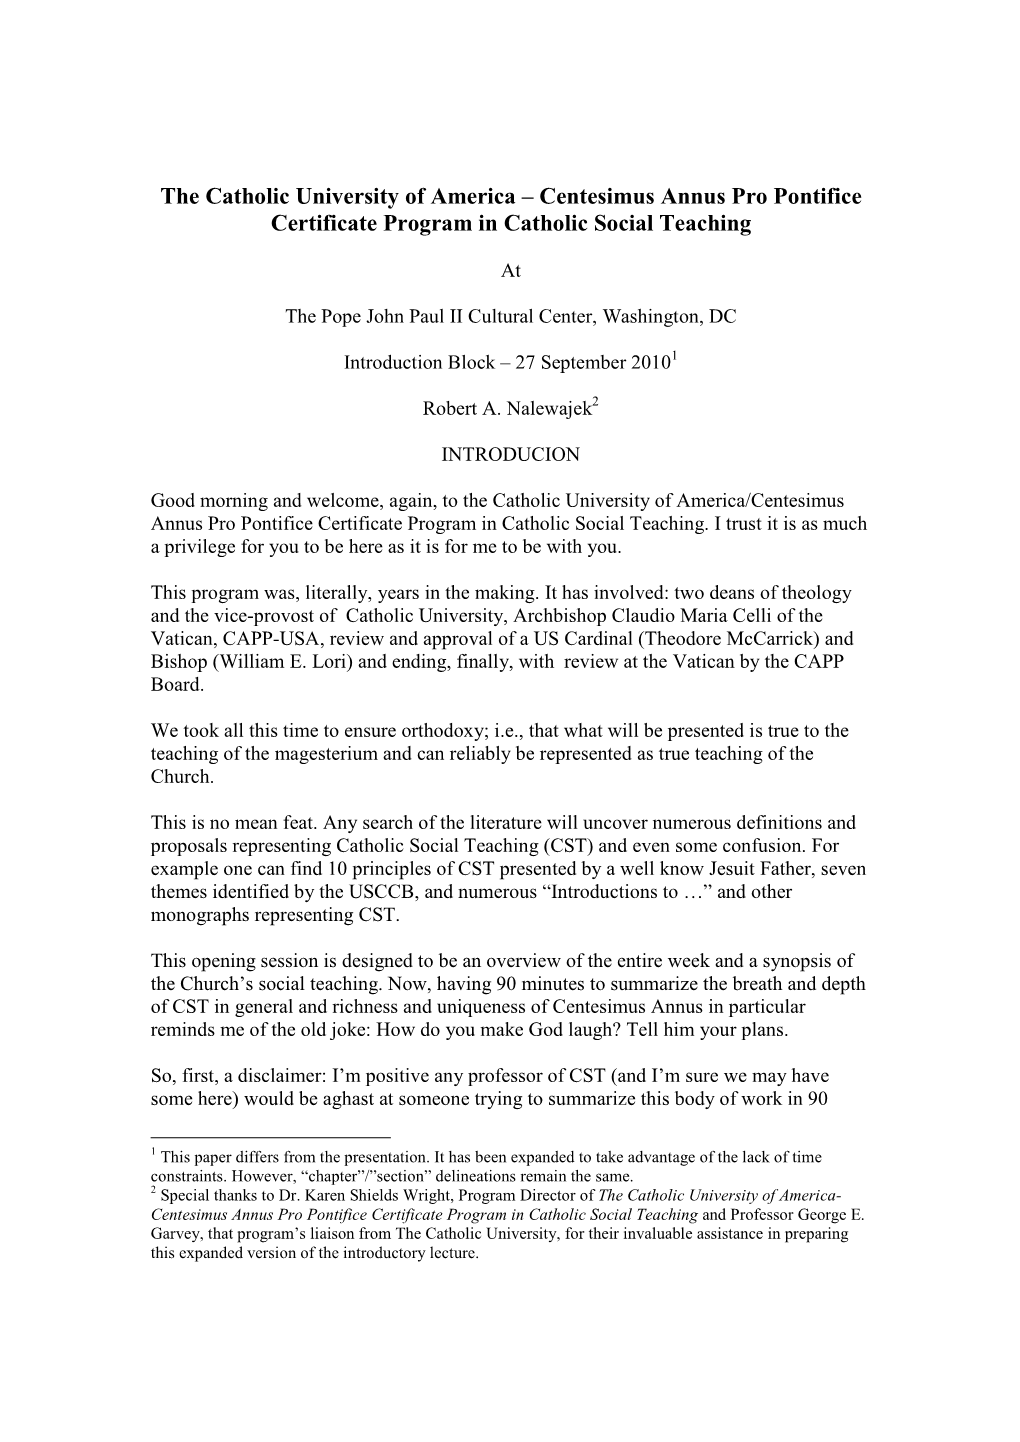 The Catholic University of America – Centesimus Annus Pro Pontifice Certificate Program in Catholic Social Teaching